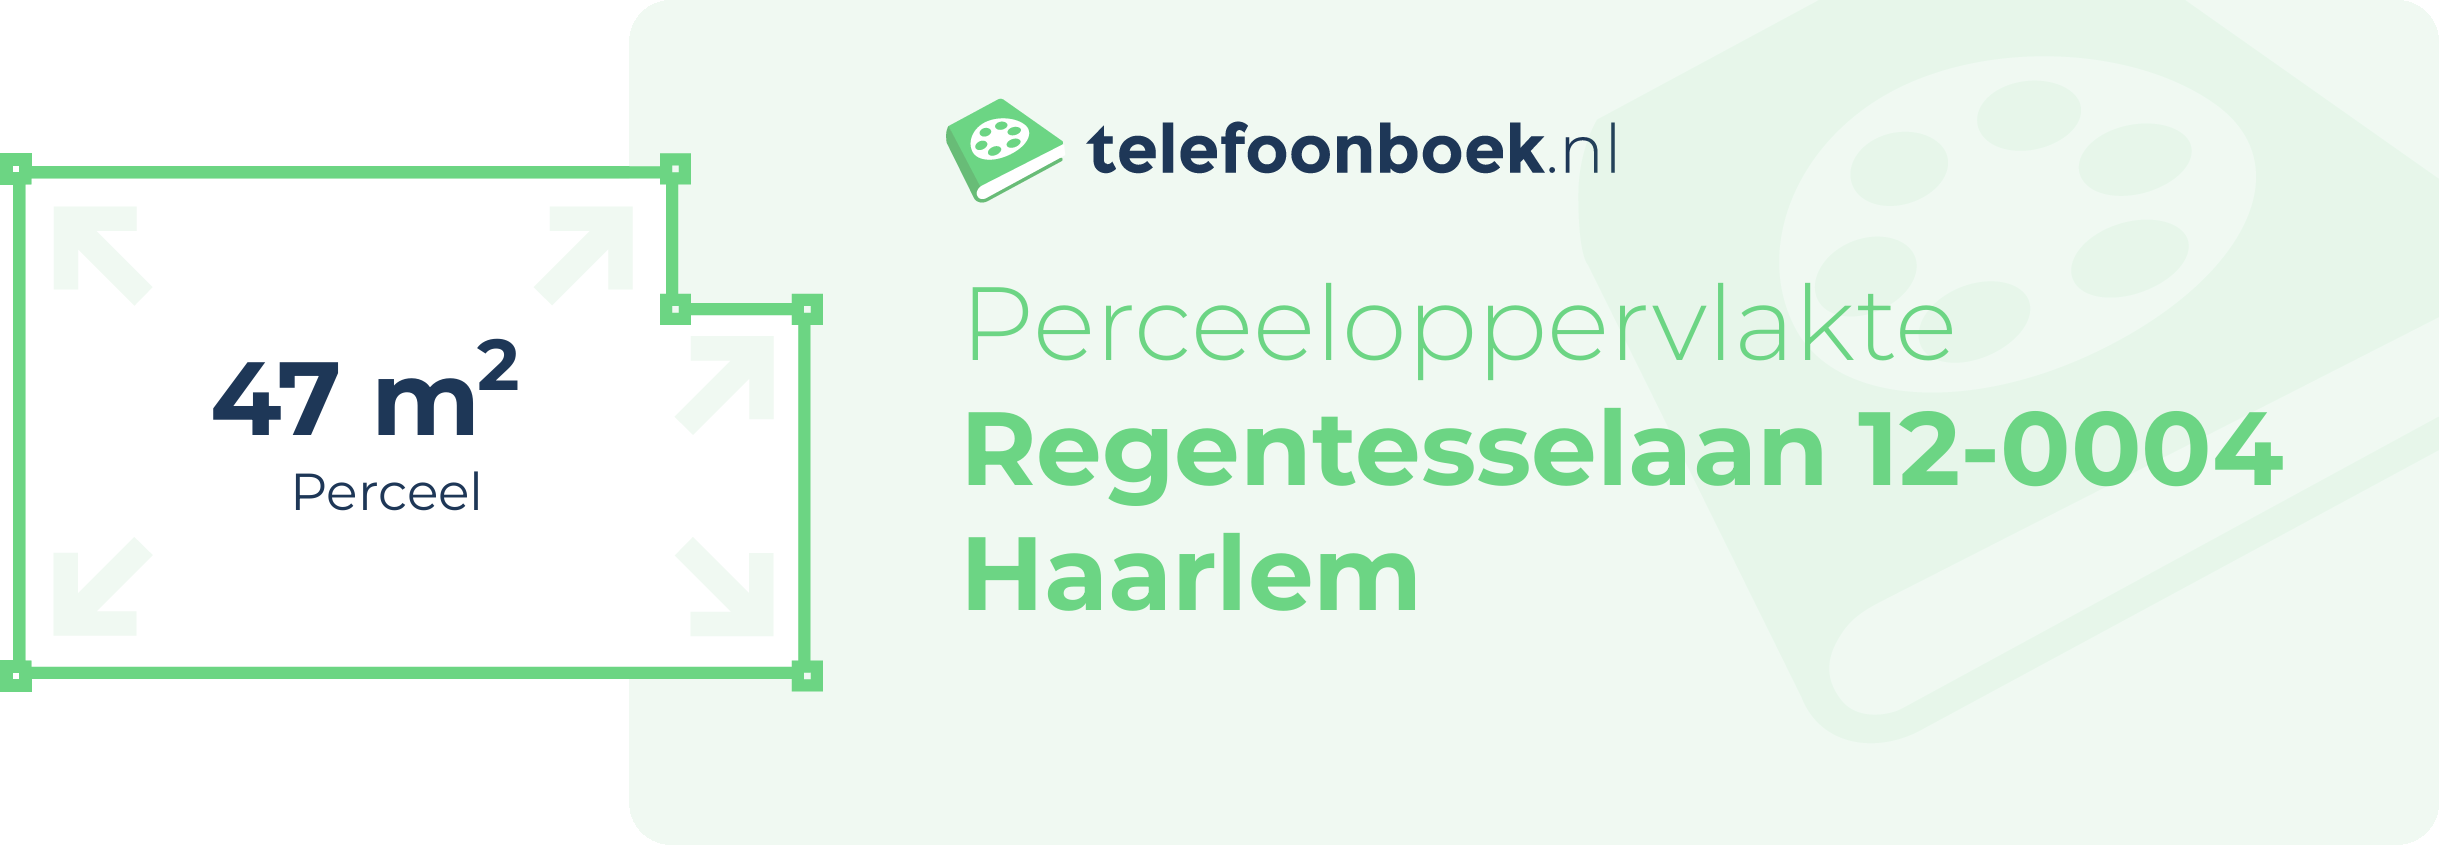 Perceeloppervlakte Regentesselaan 12-0004 Haarlem